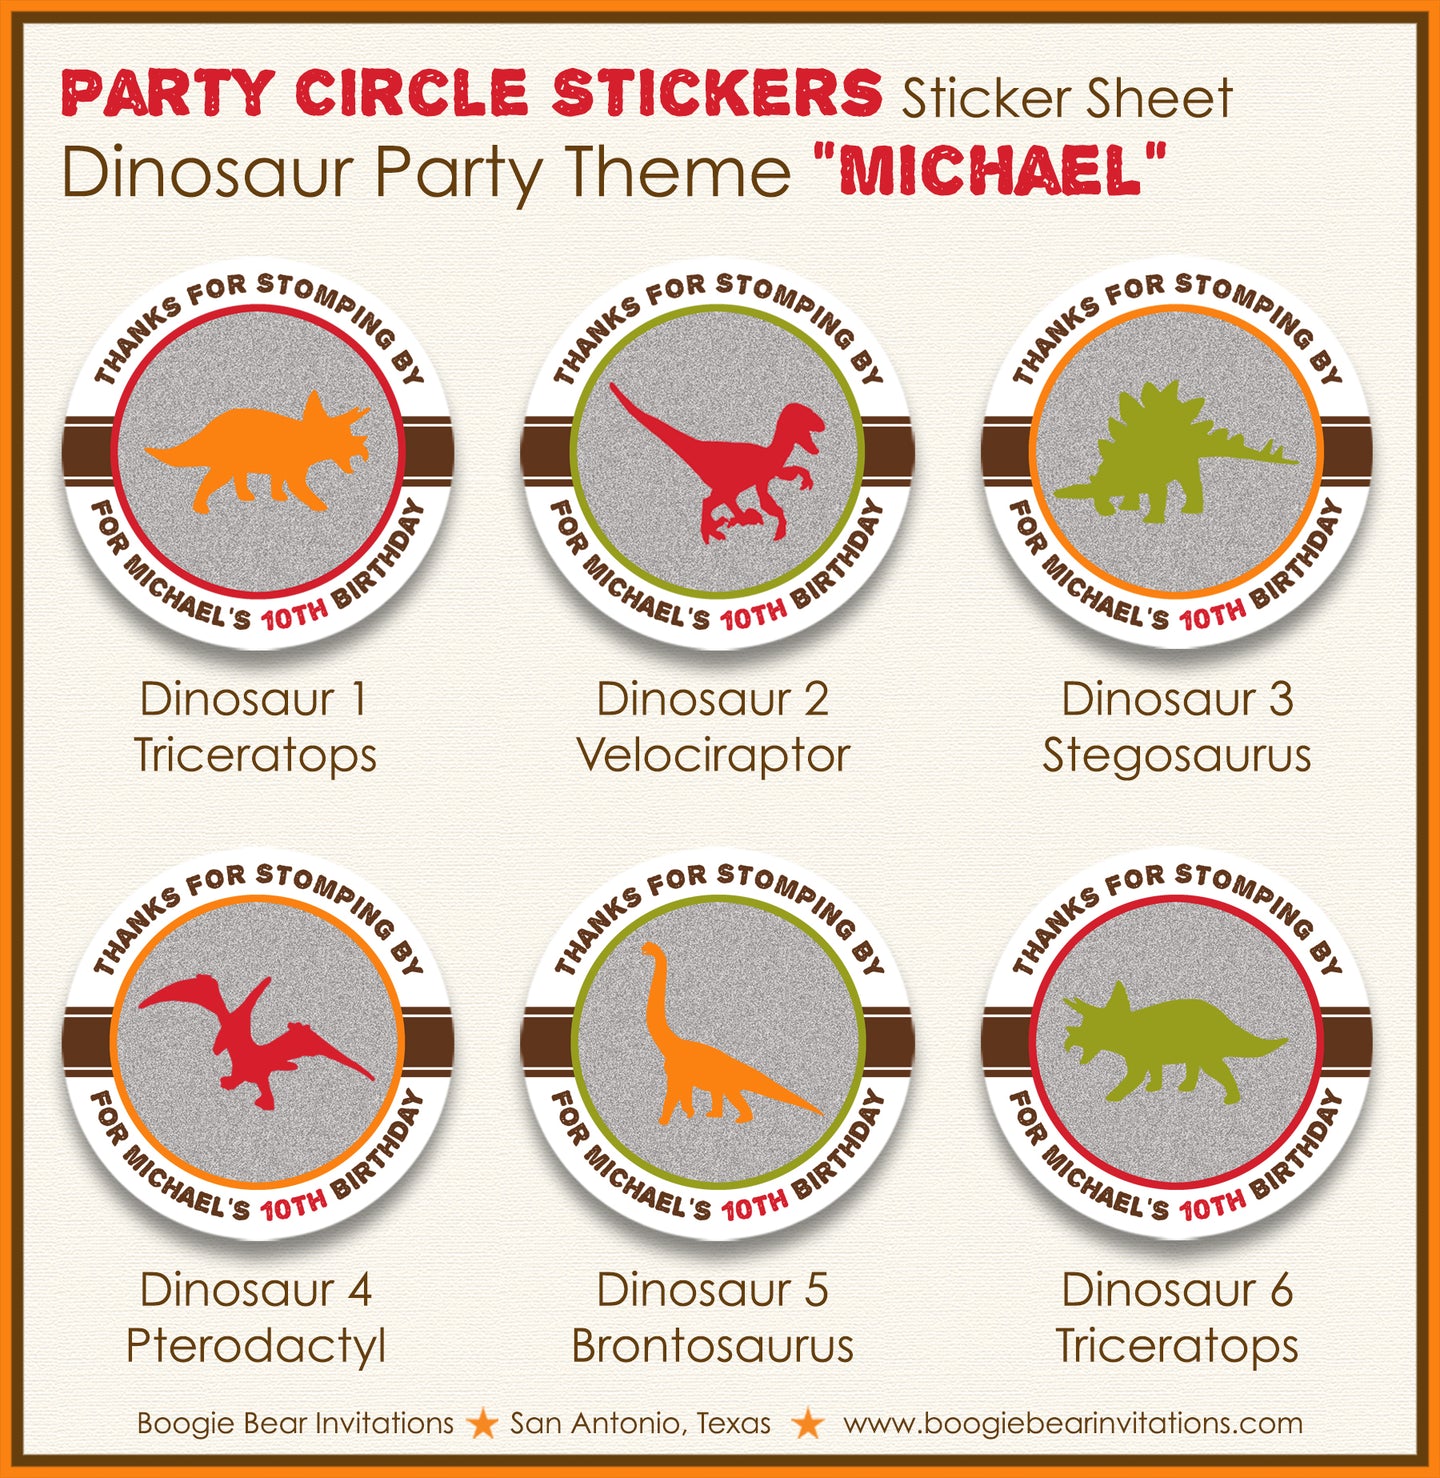 Dinosaur Birthday Party Stickers Circle Sheet Round Modern Boogie Bear Invitations Michael Theme